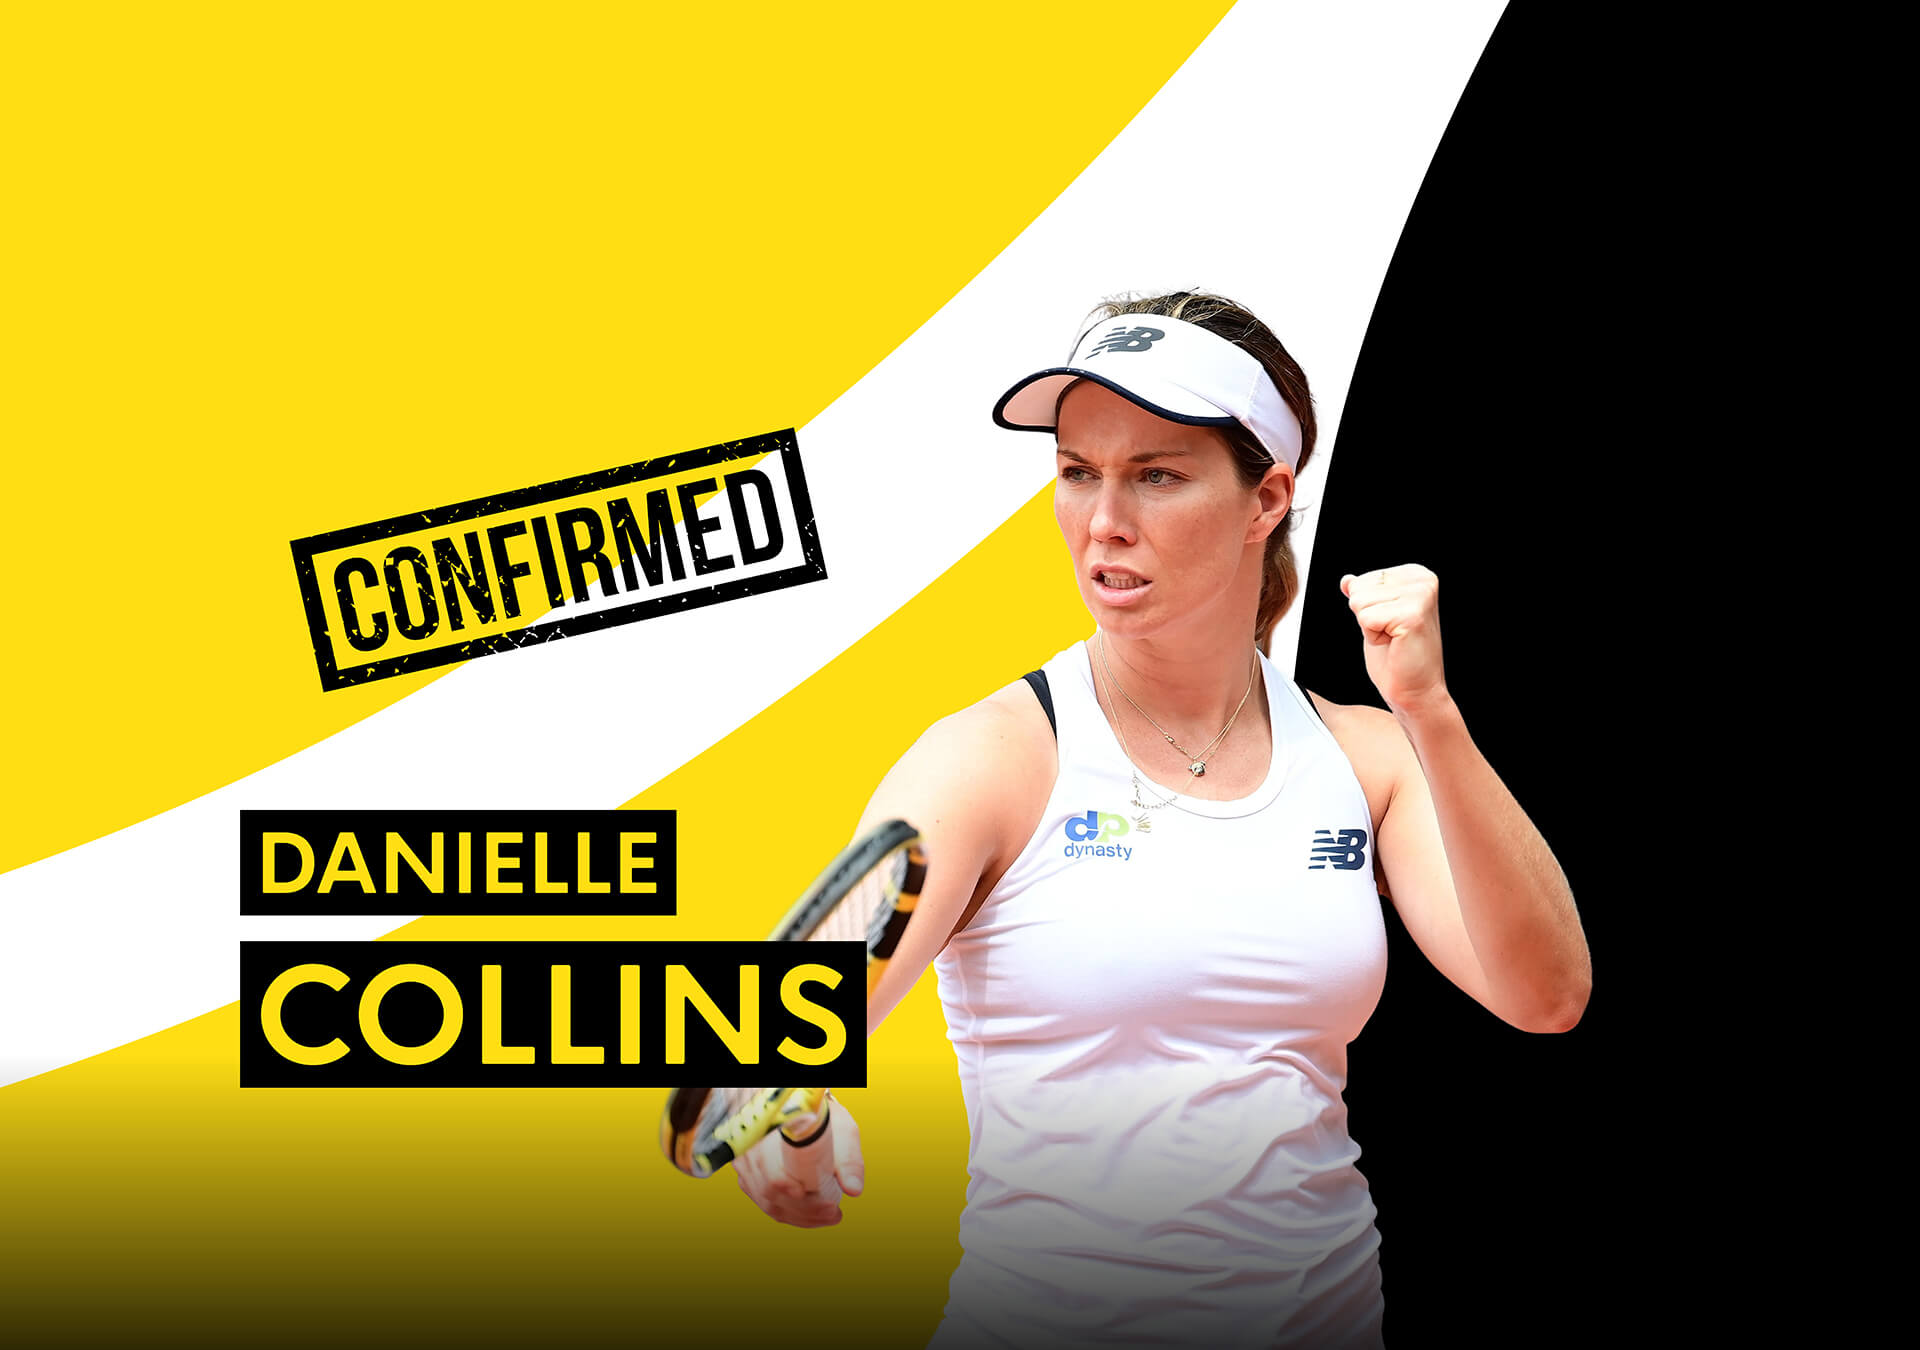 Australian Open finalist Danielle Collins set to play at Rothenbaum